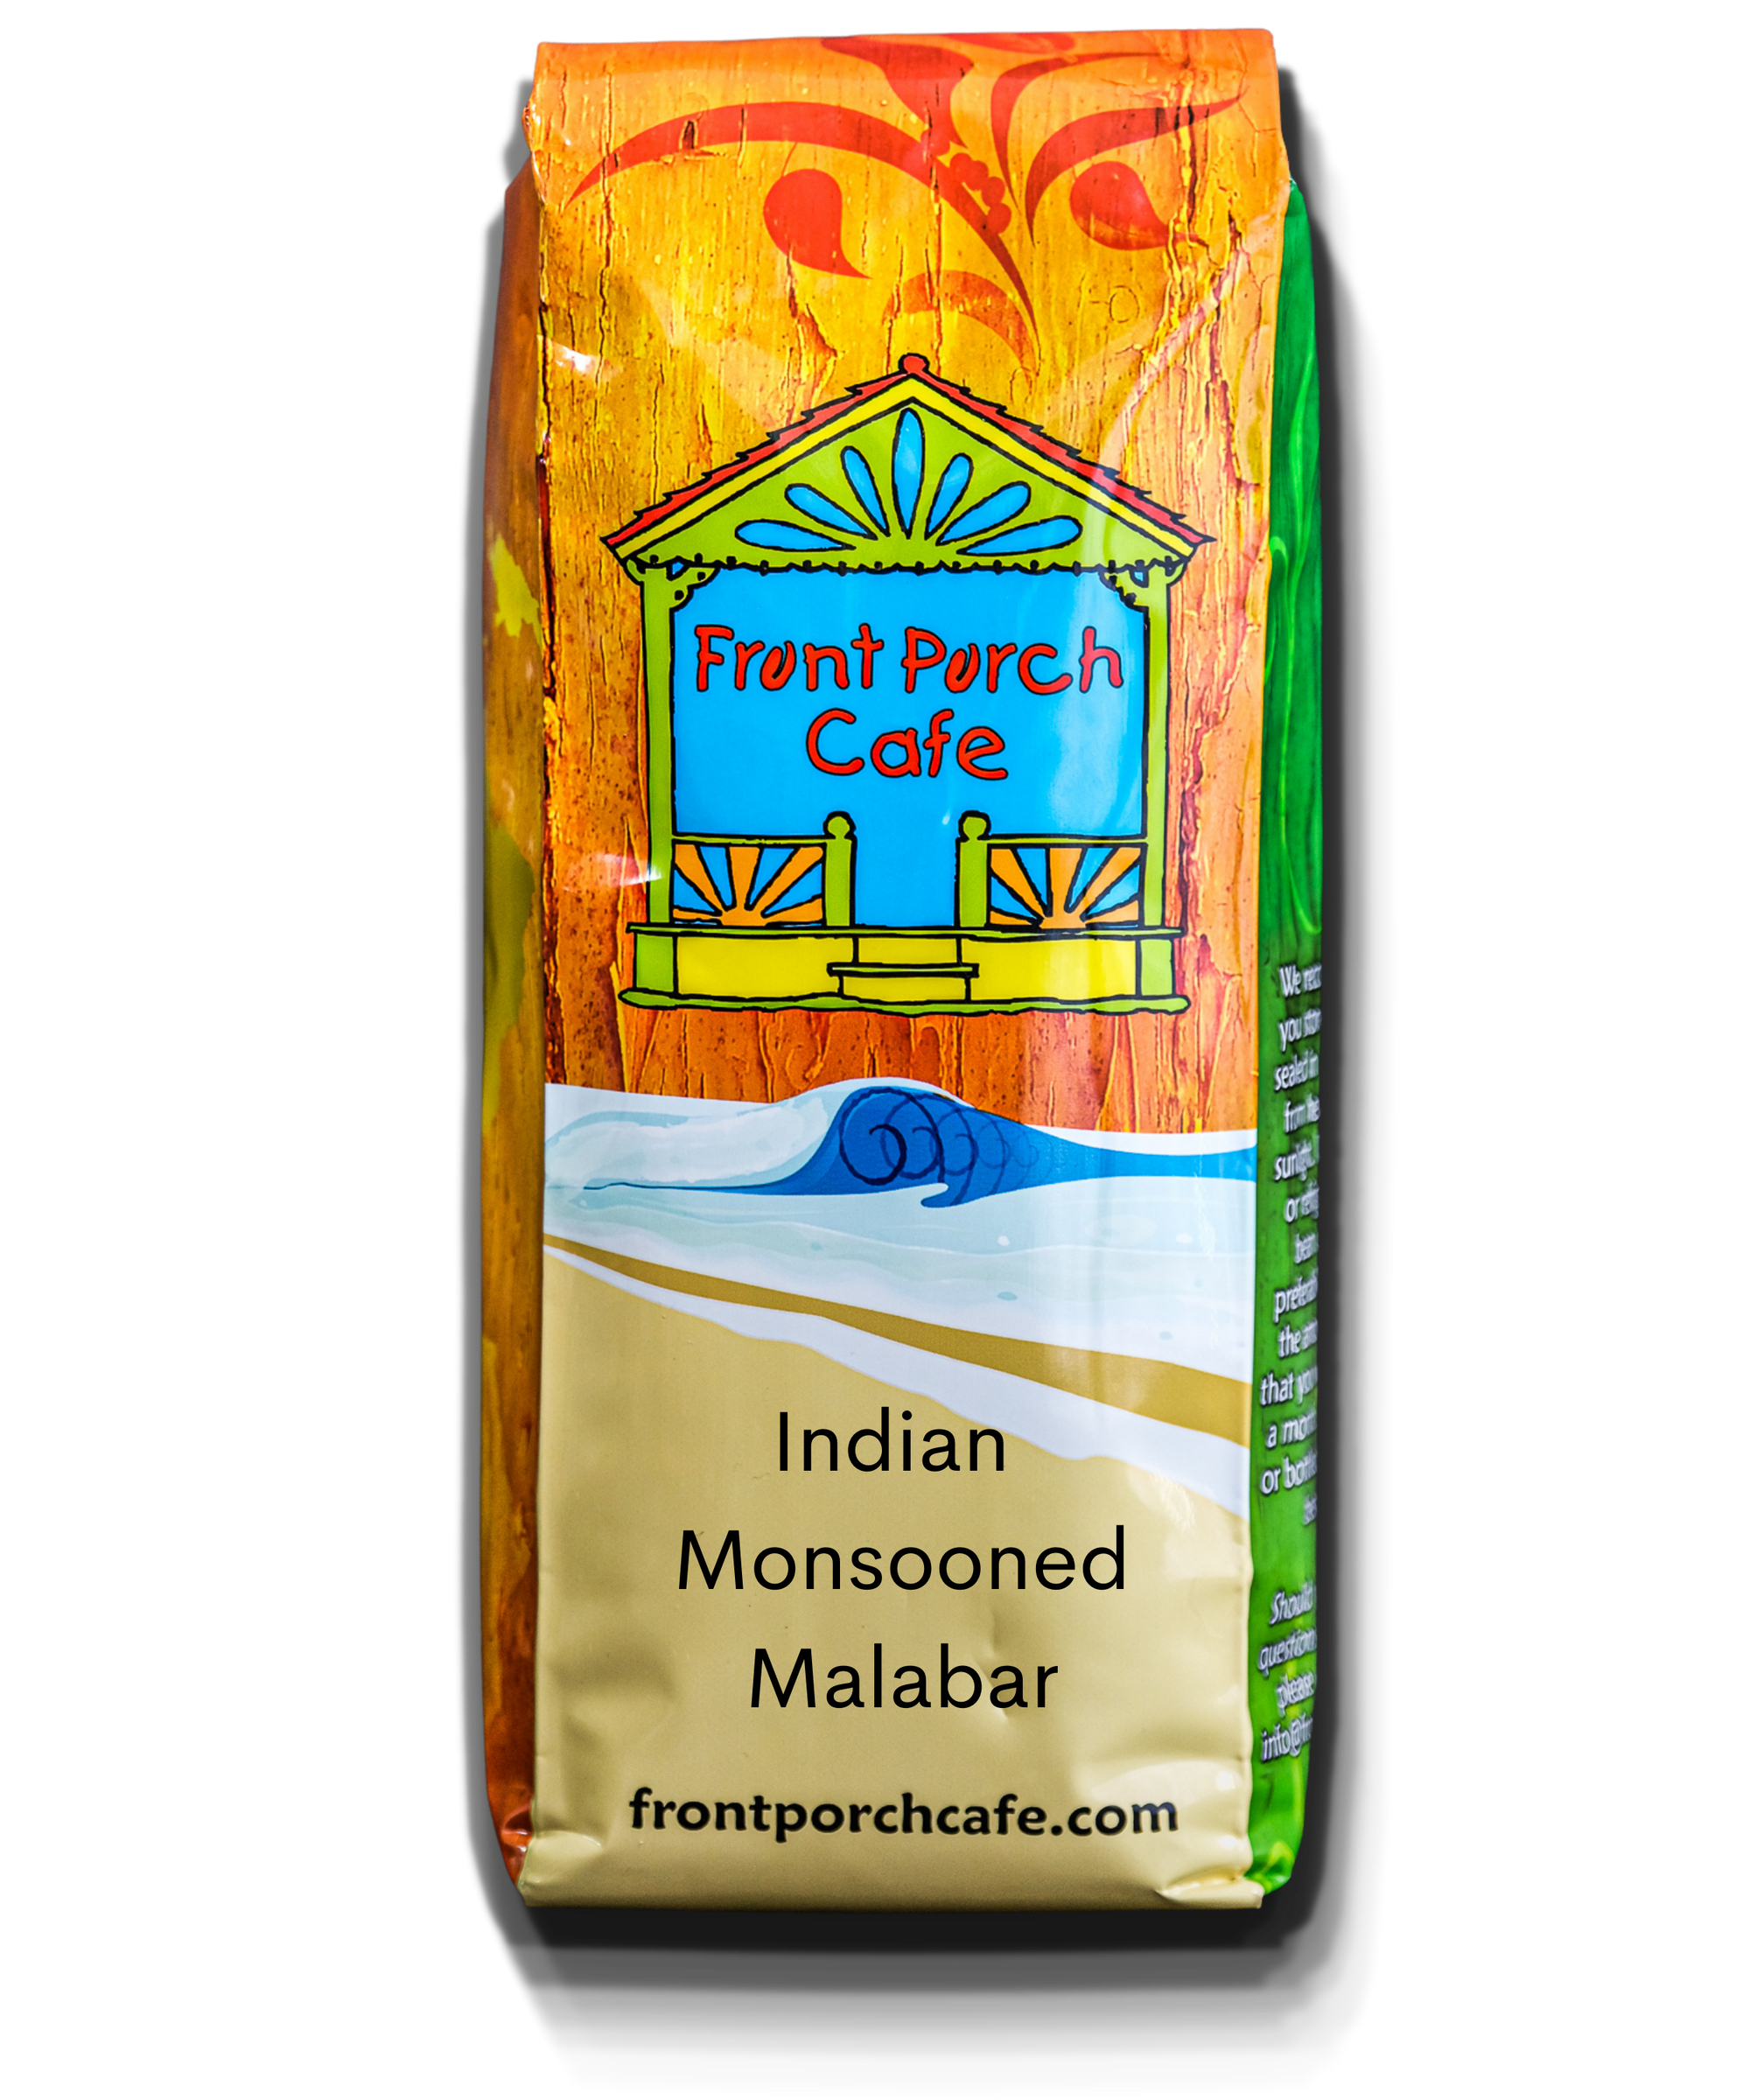 Indian Monsooned Malabar